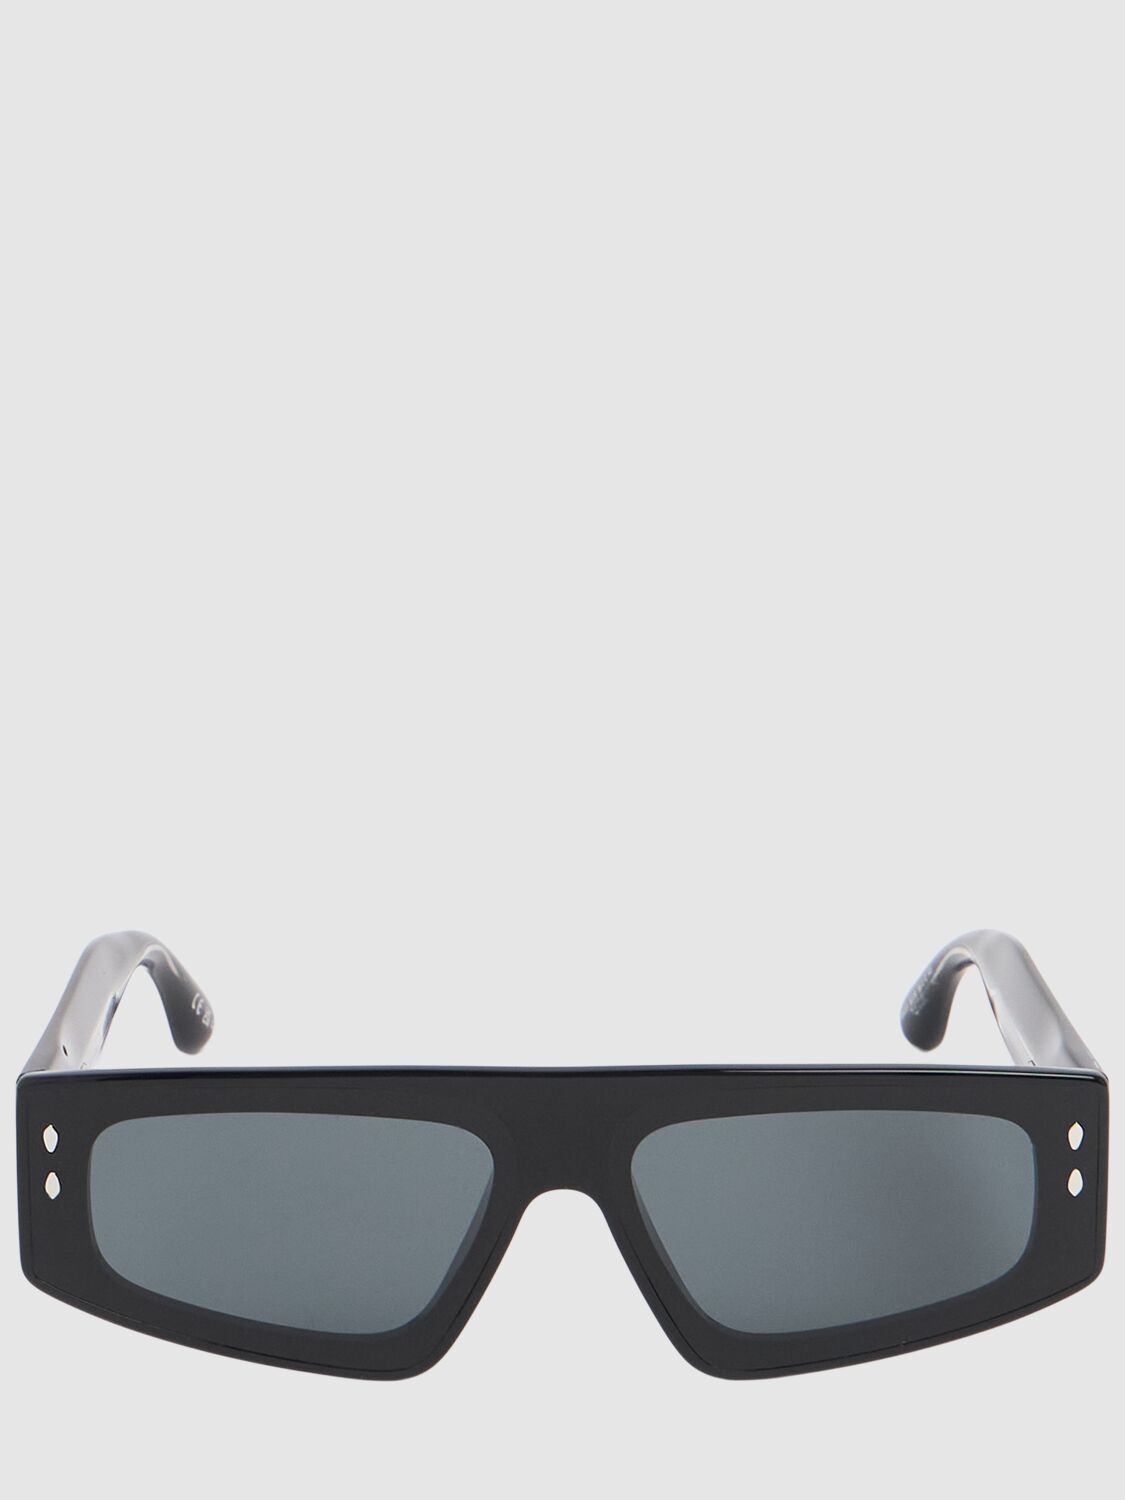 Isabel Marant Maxi Temple Squared Acetate Sunglasses In Black/grey